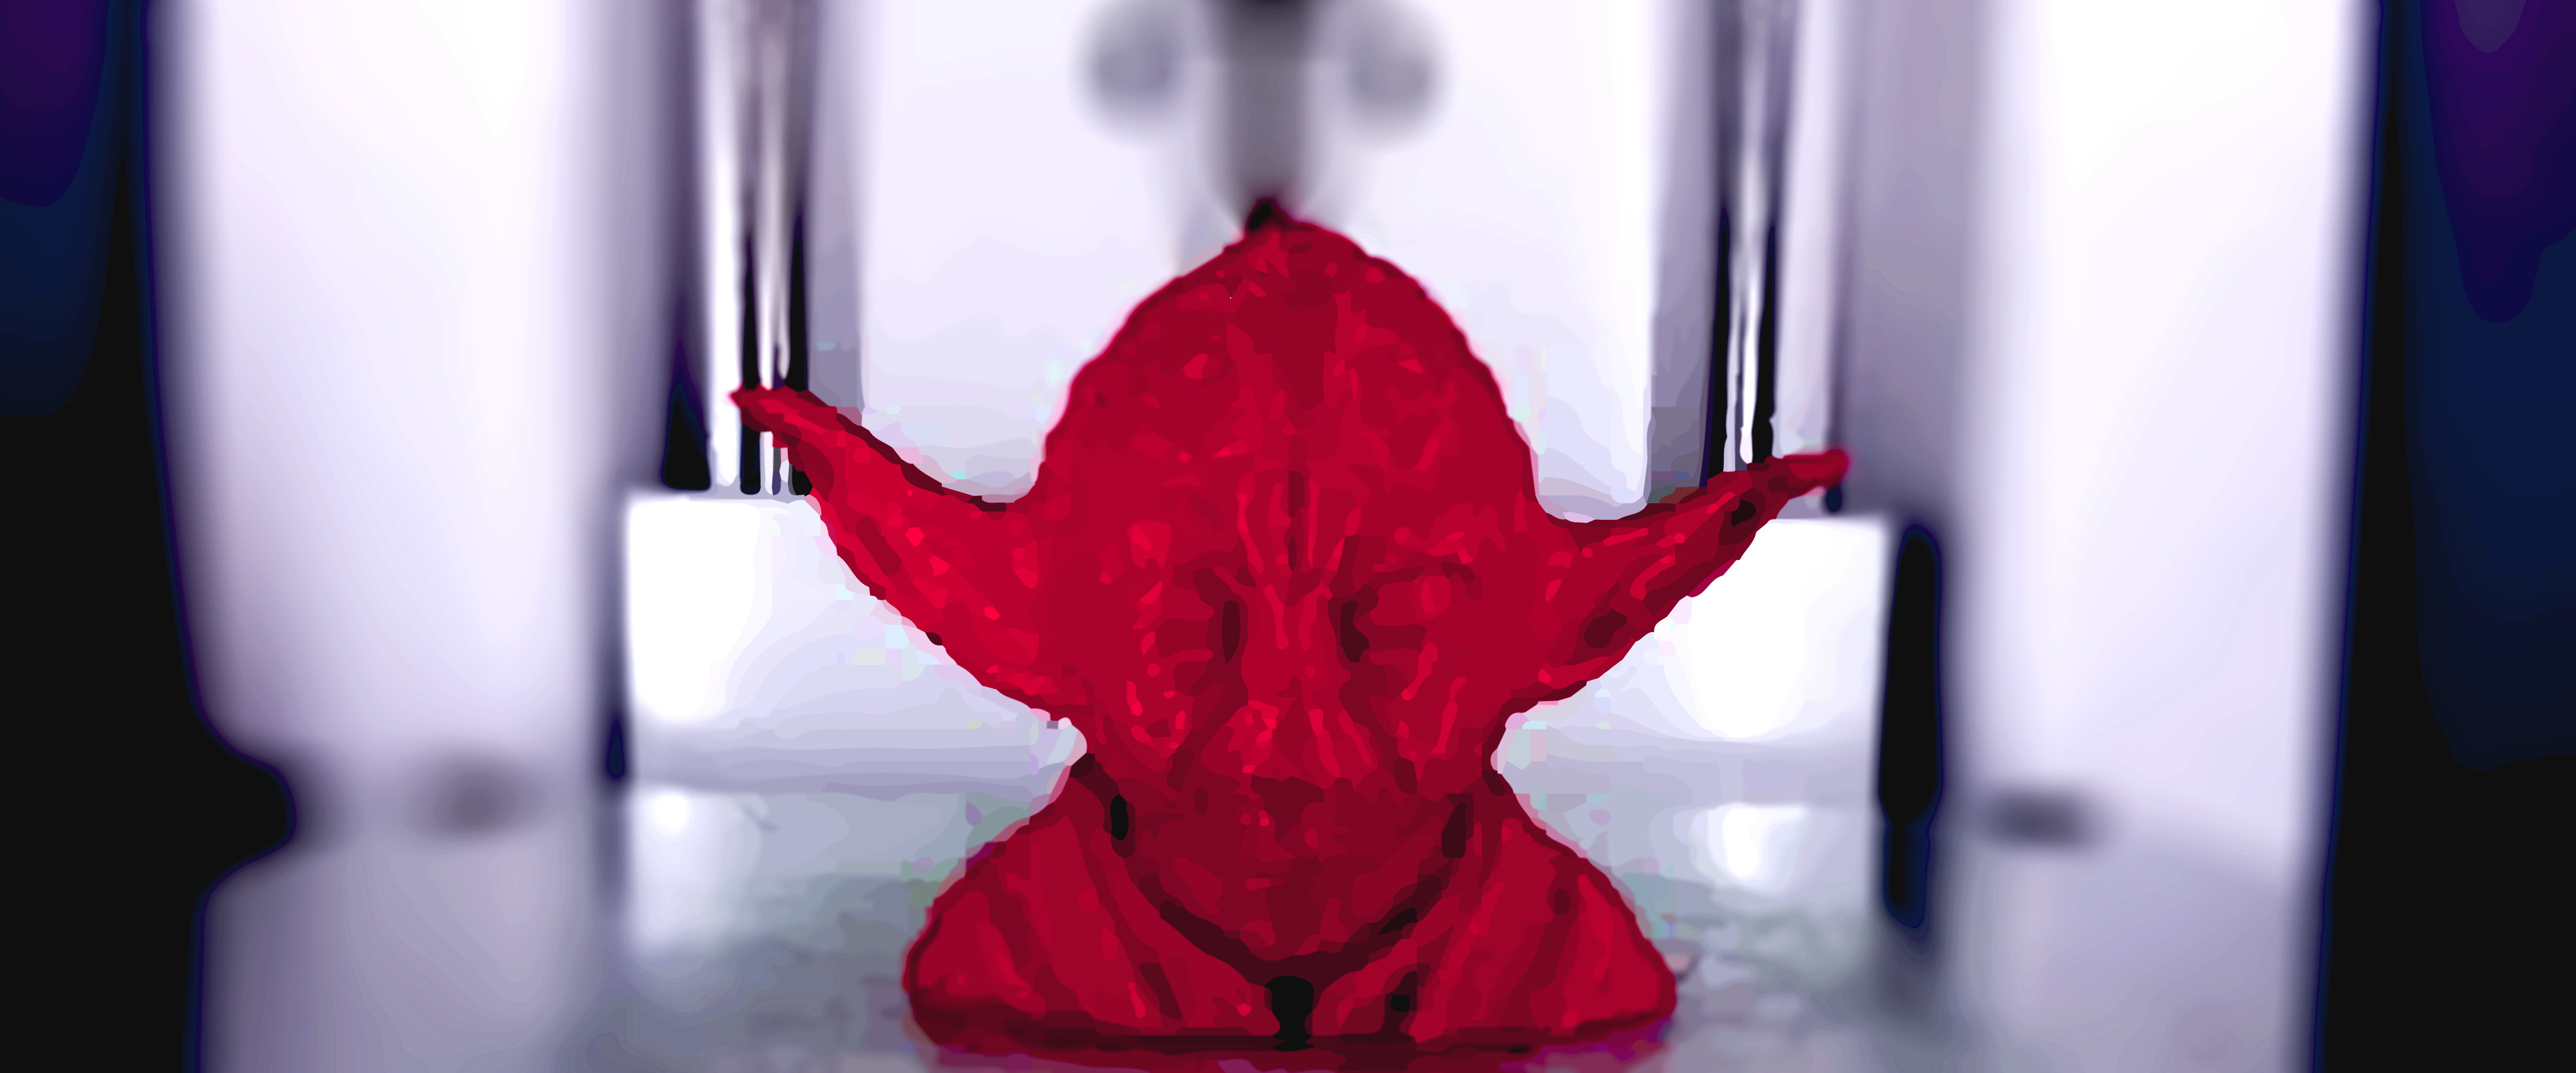 Impresión 3D: Crea tu "Cubo de Compañía" 5